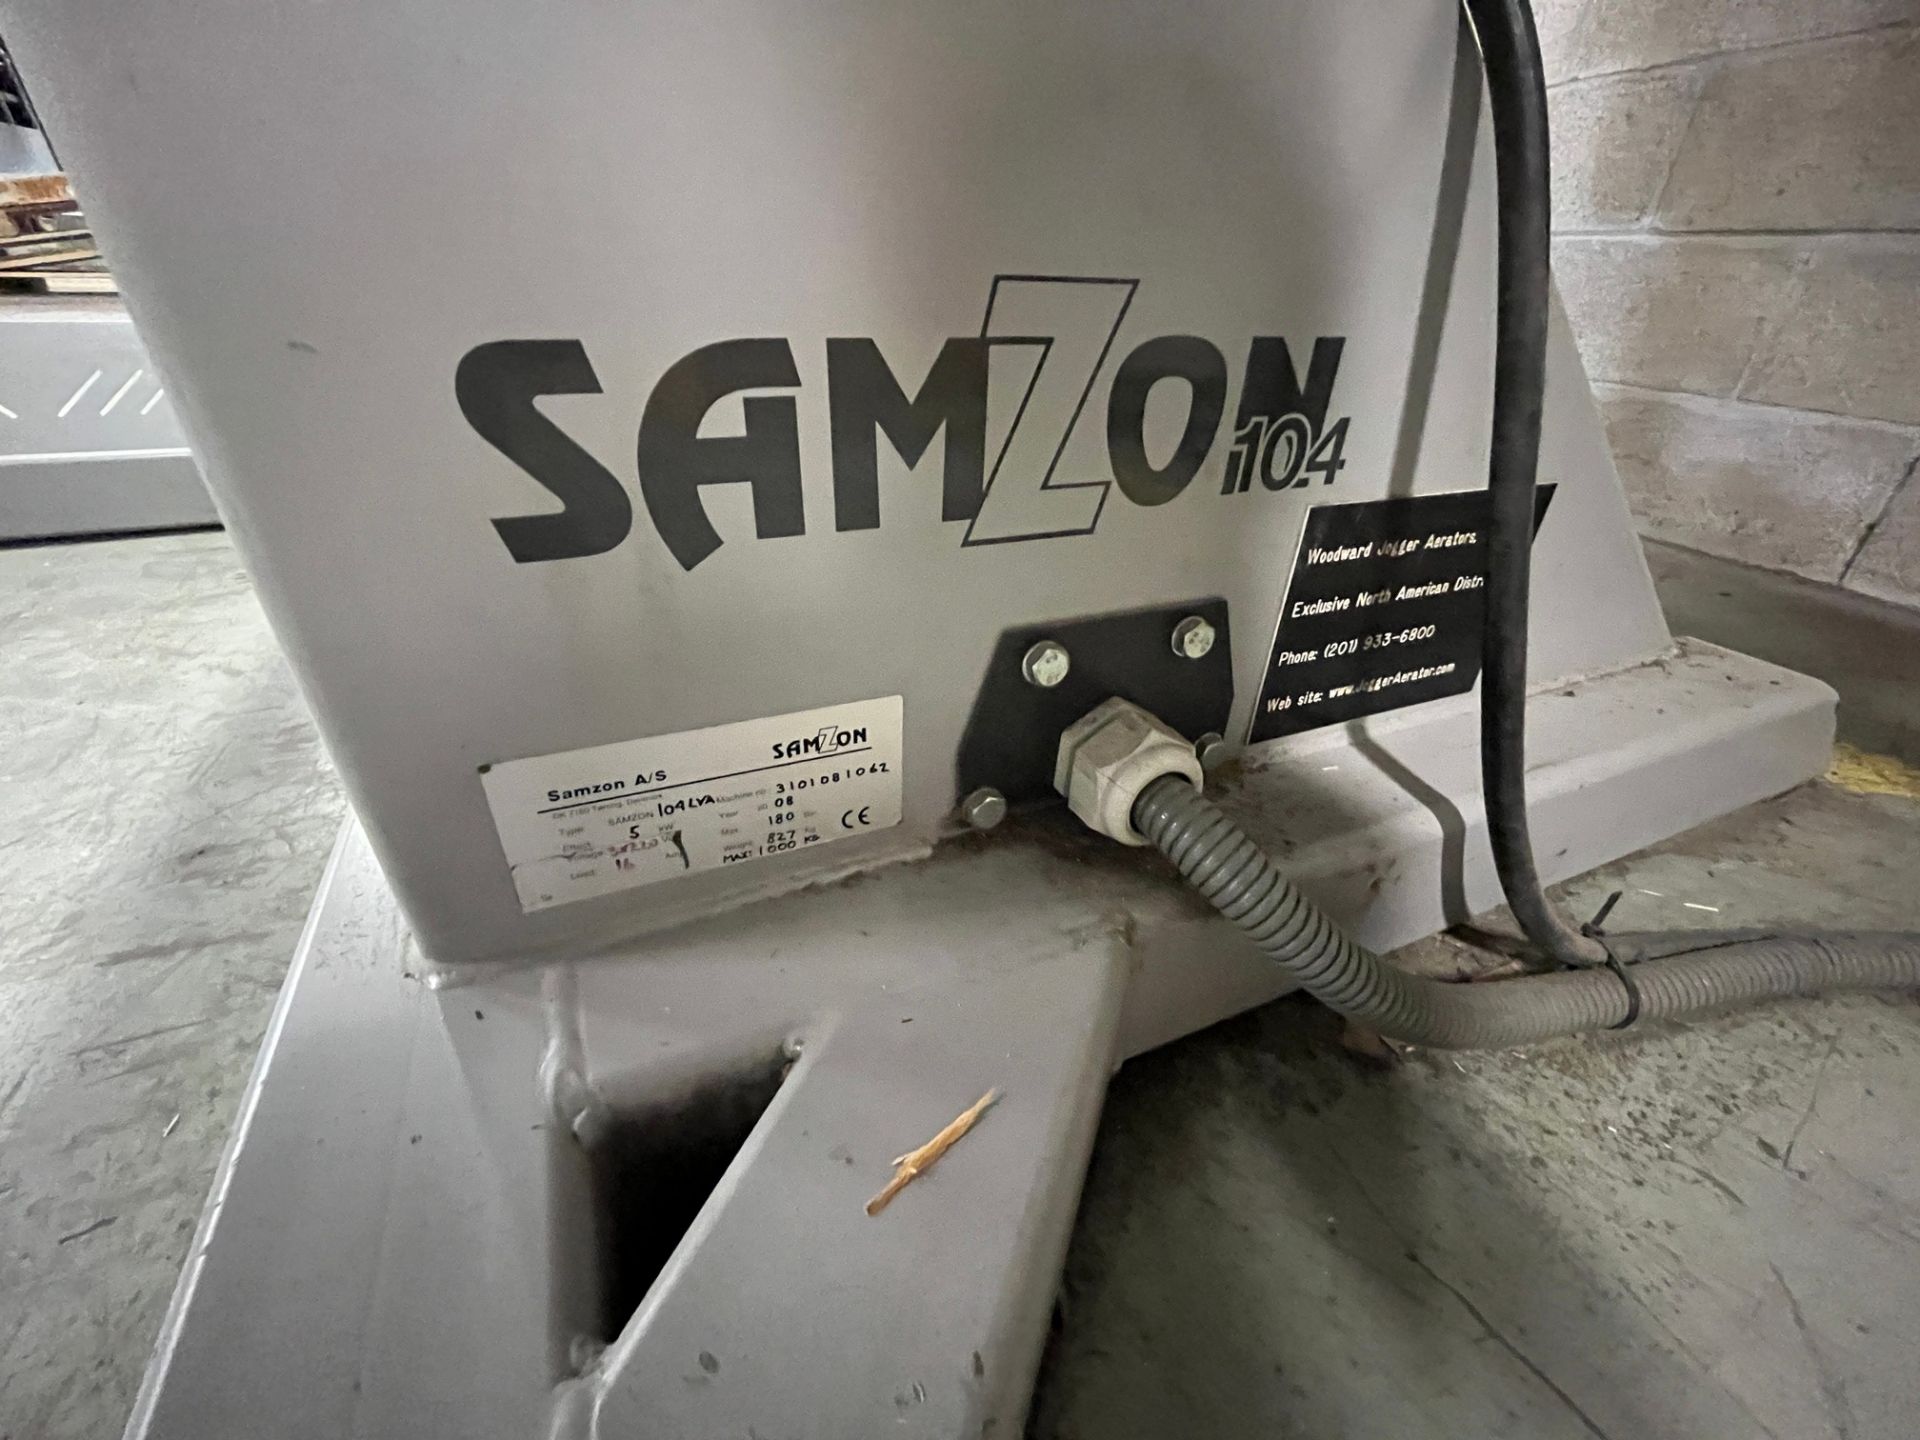 SAMZON 104 PAPER TURNING MACHINE W/ CONTROL PANEL AND VACUUM PUMP - Image 2 of 5